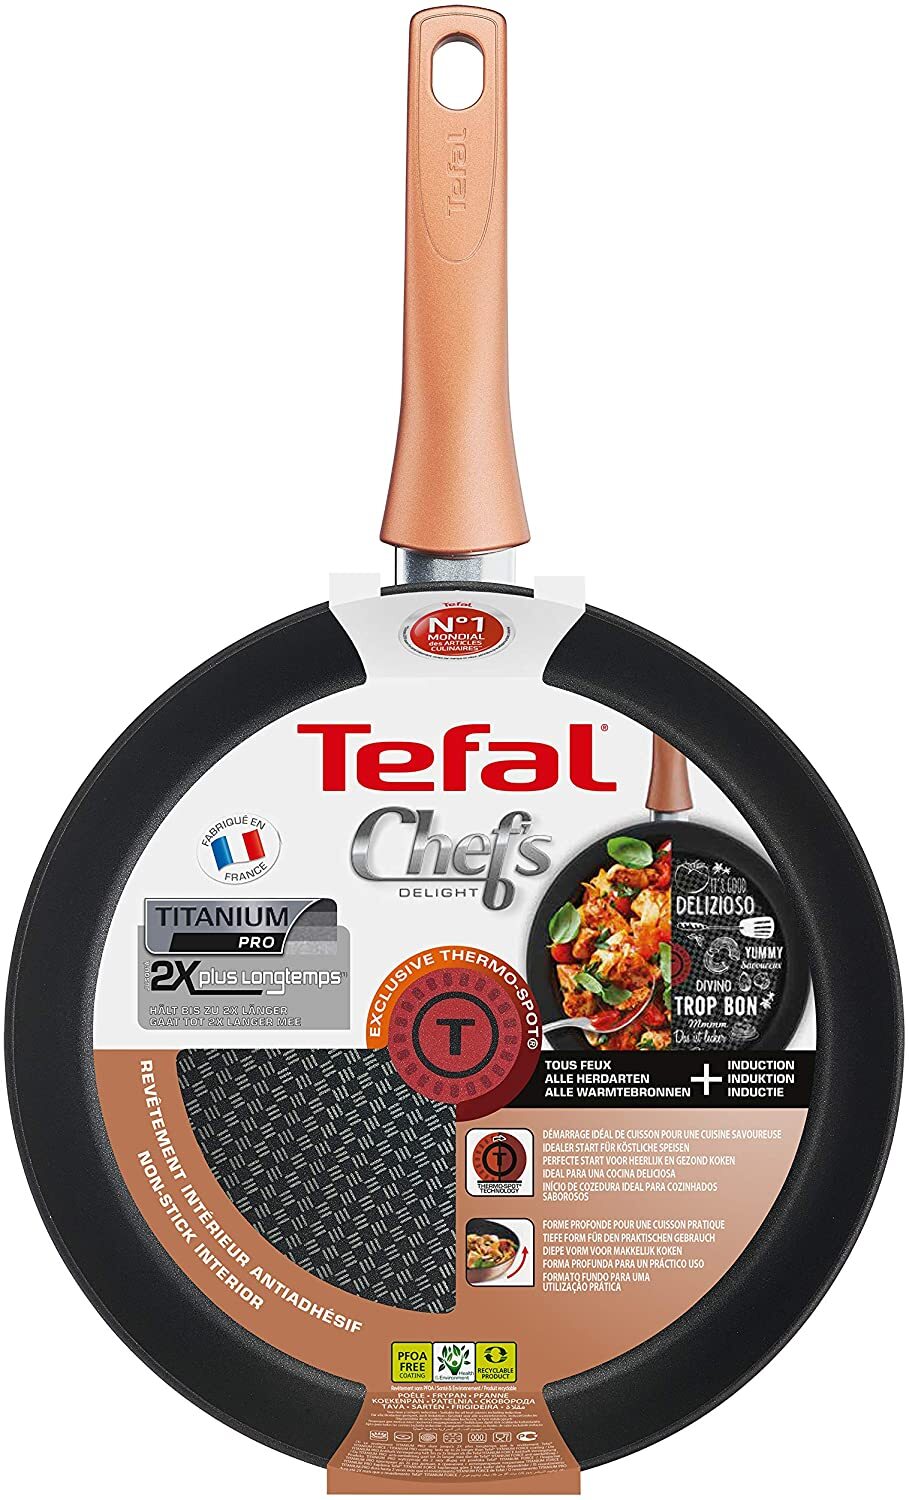 Tefal G11704 Chef's Delight Bratpfanne, antihaftversiegelt, inklusive Thermo-Spot, 24 cm, kupferoptik